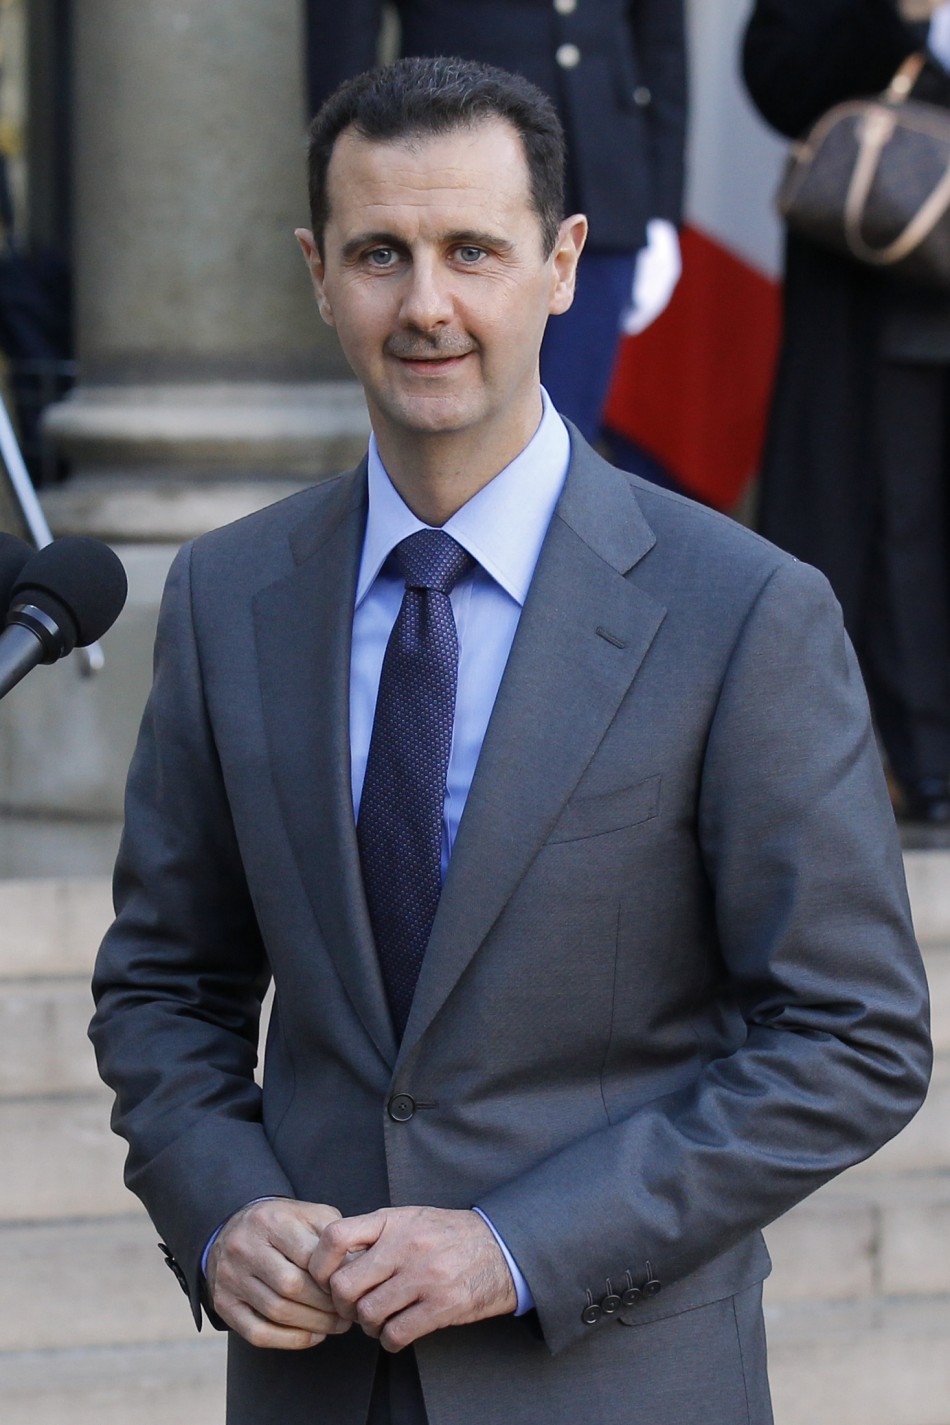 Syria's President Bashar Al-Asad, early 2011.